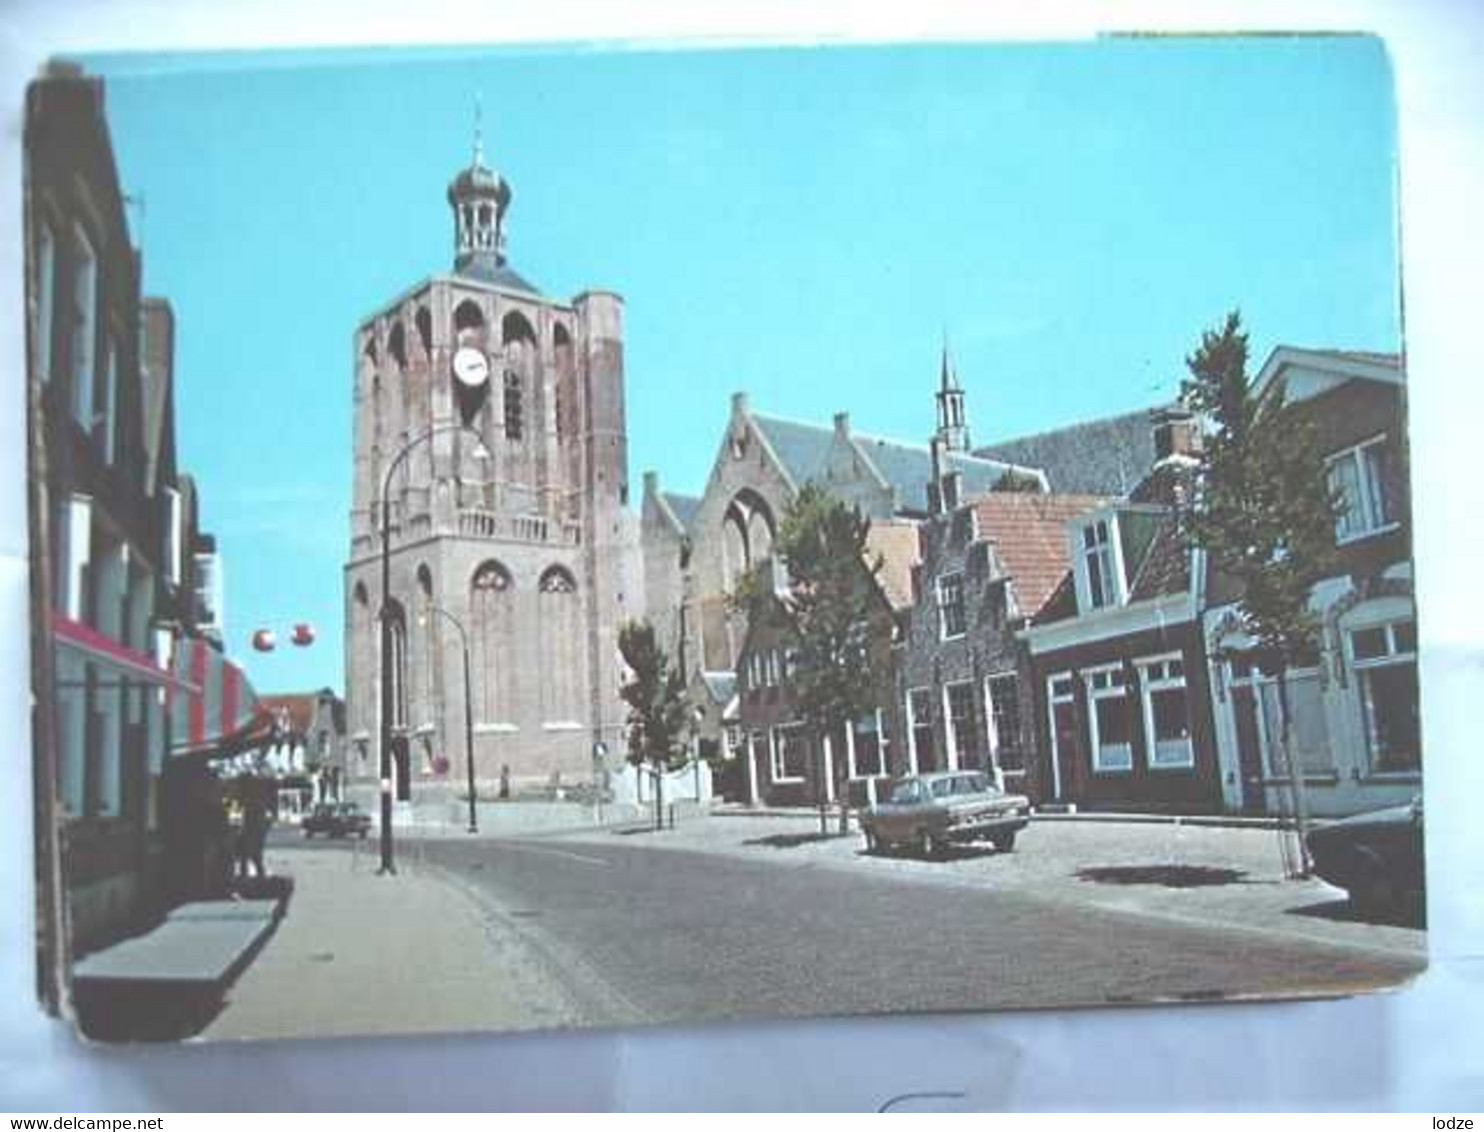 Nederland Holland Pays Bas Workum NH Kerk Met Toren En Oude Auto - Workum